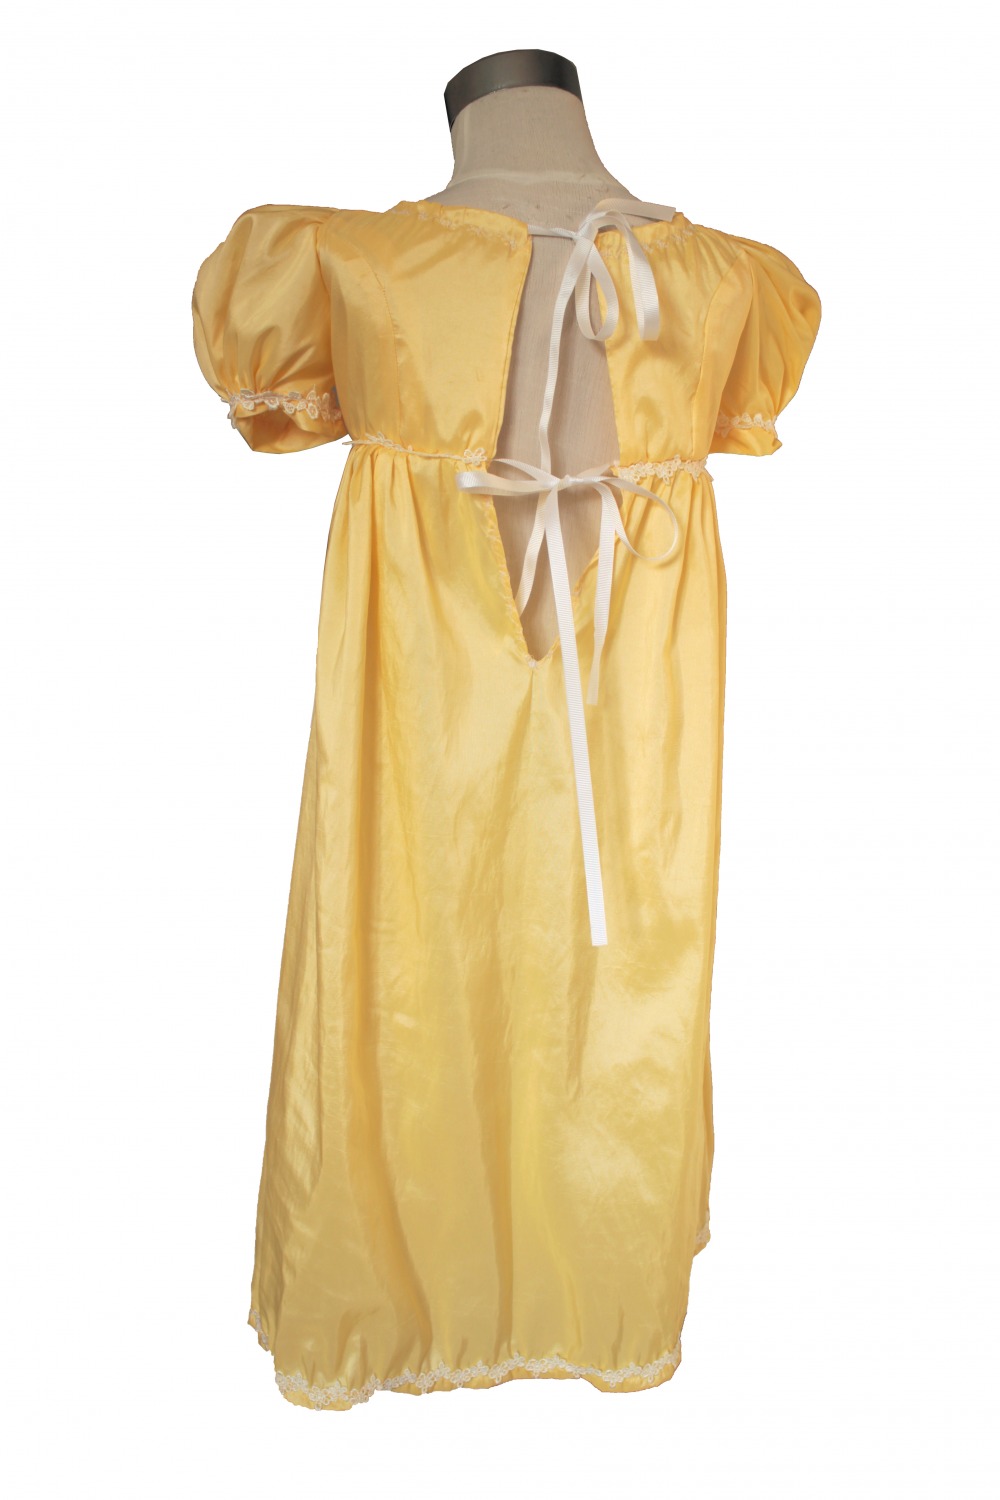 Girl's Regency Jane Austen Costume Age 3 - 4 Years Image